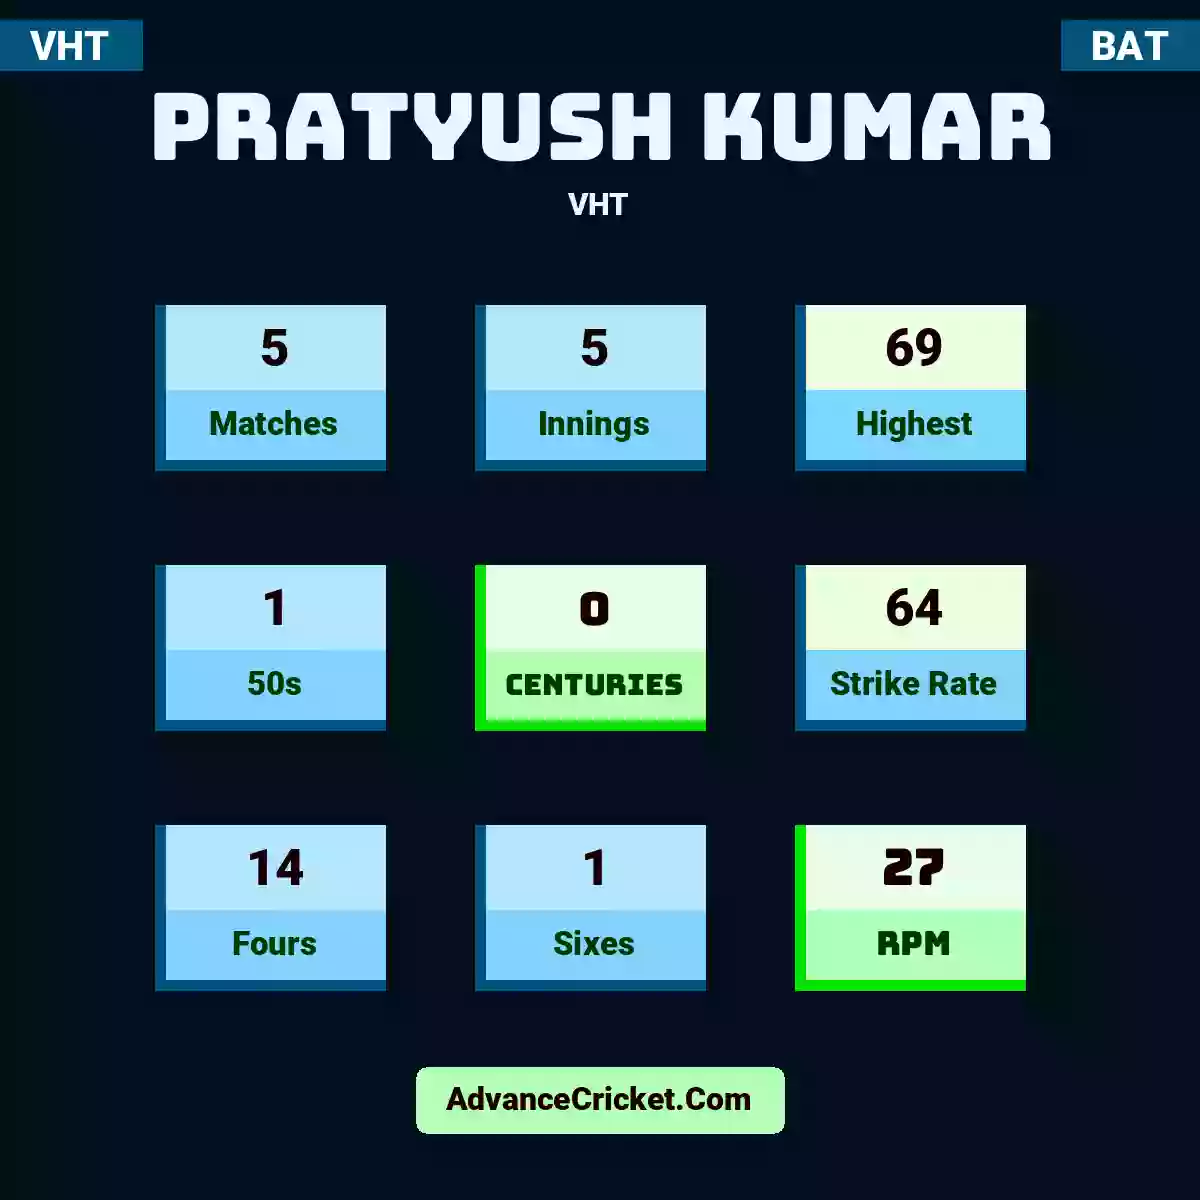 Pratyush Kumar VHT , Pratyush Kumar played 5 matches, scored 69 runs as highest, 1 half-centuries, and 0 centuries, with a strike rate of 64. Pr.Kumar hit 14 fours and 1 sixes, with an RPM of 27.